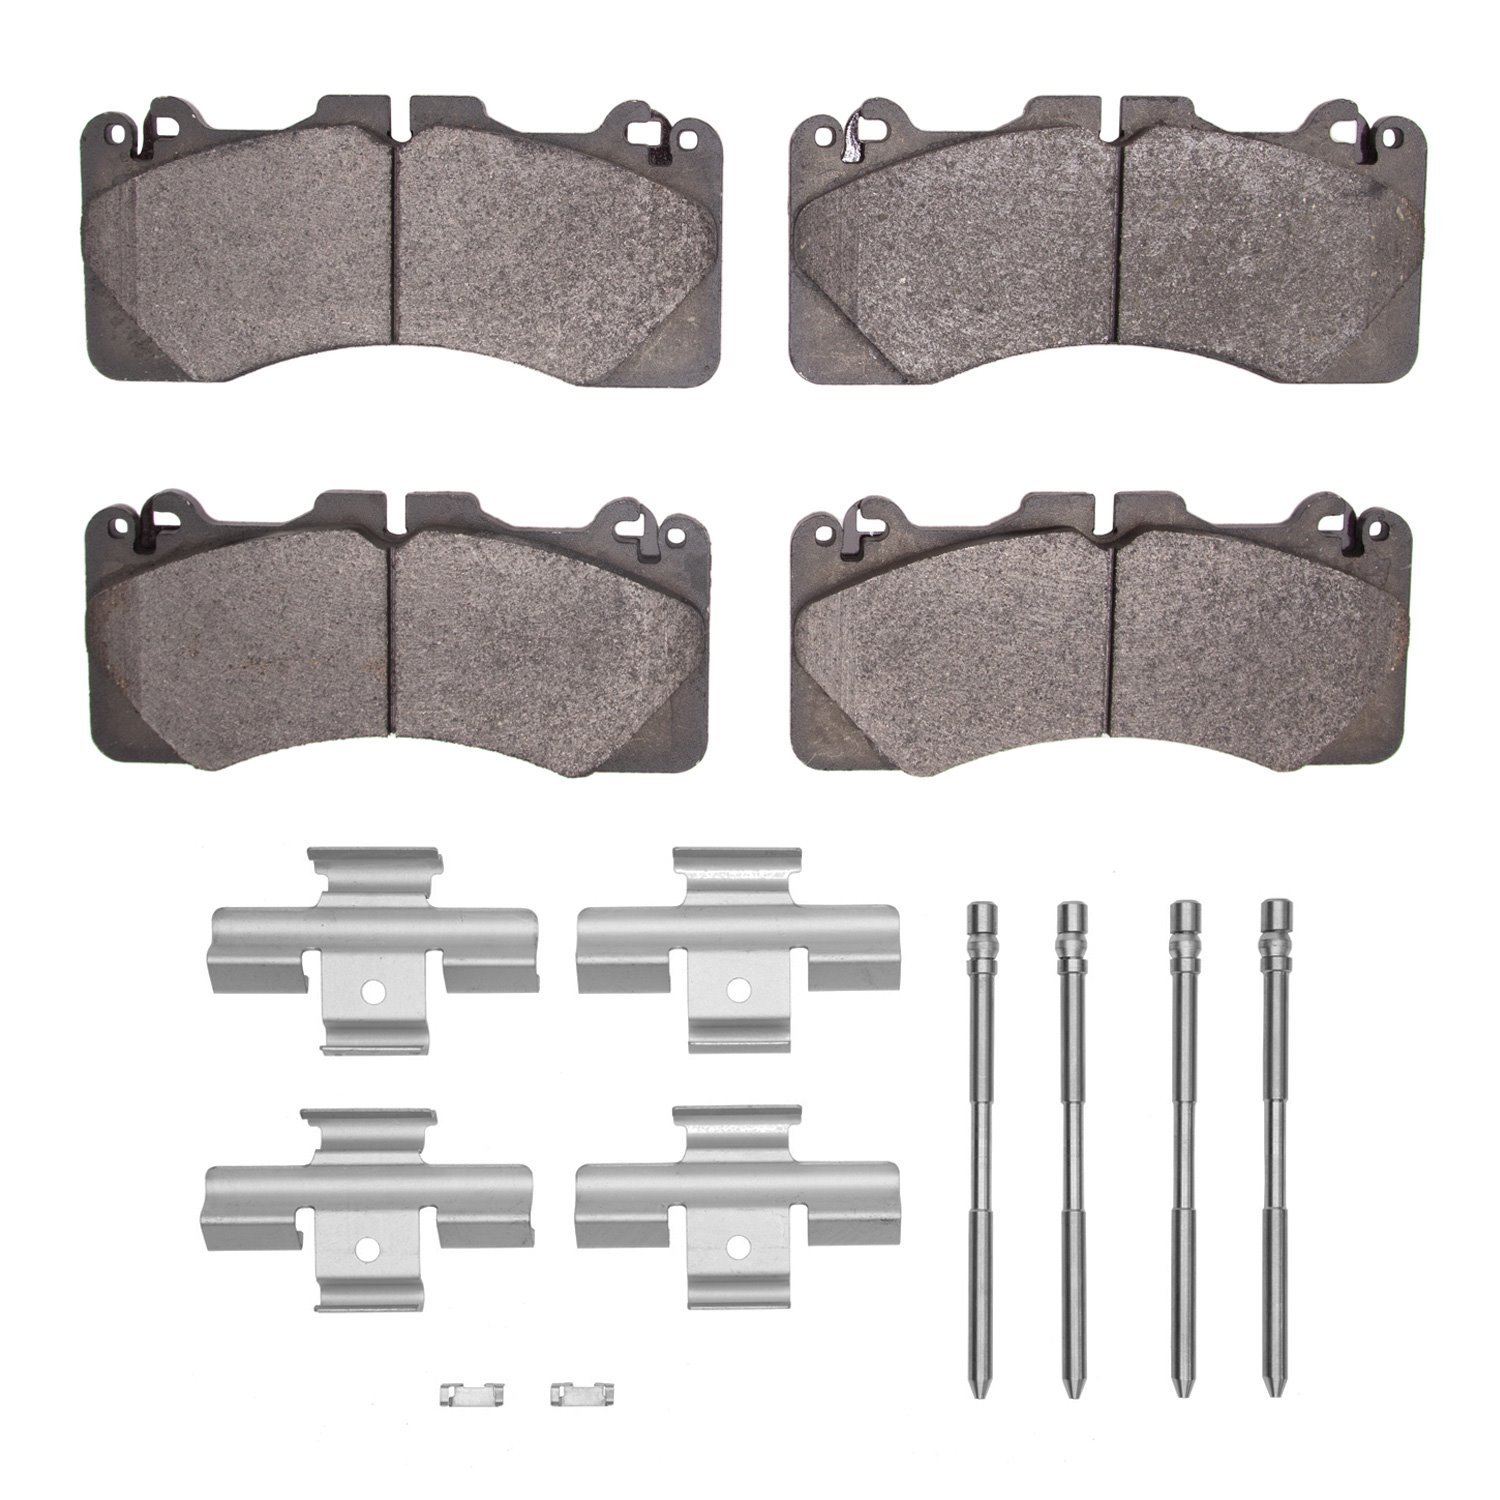 1551-1440-01 5000 Advanced Low-Metallic Brake Pads & Hardware Kit, Fits Select Lexus/Toyota/Scion, Position: Front